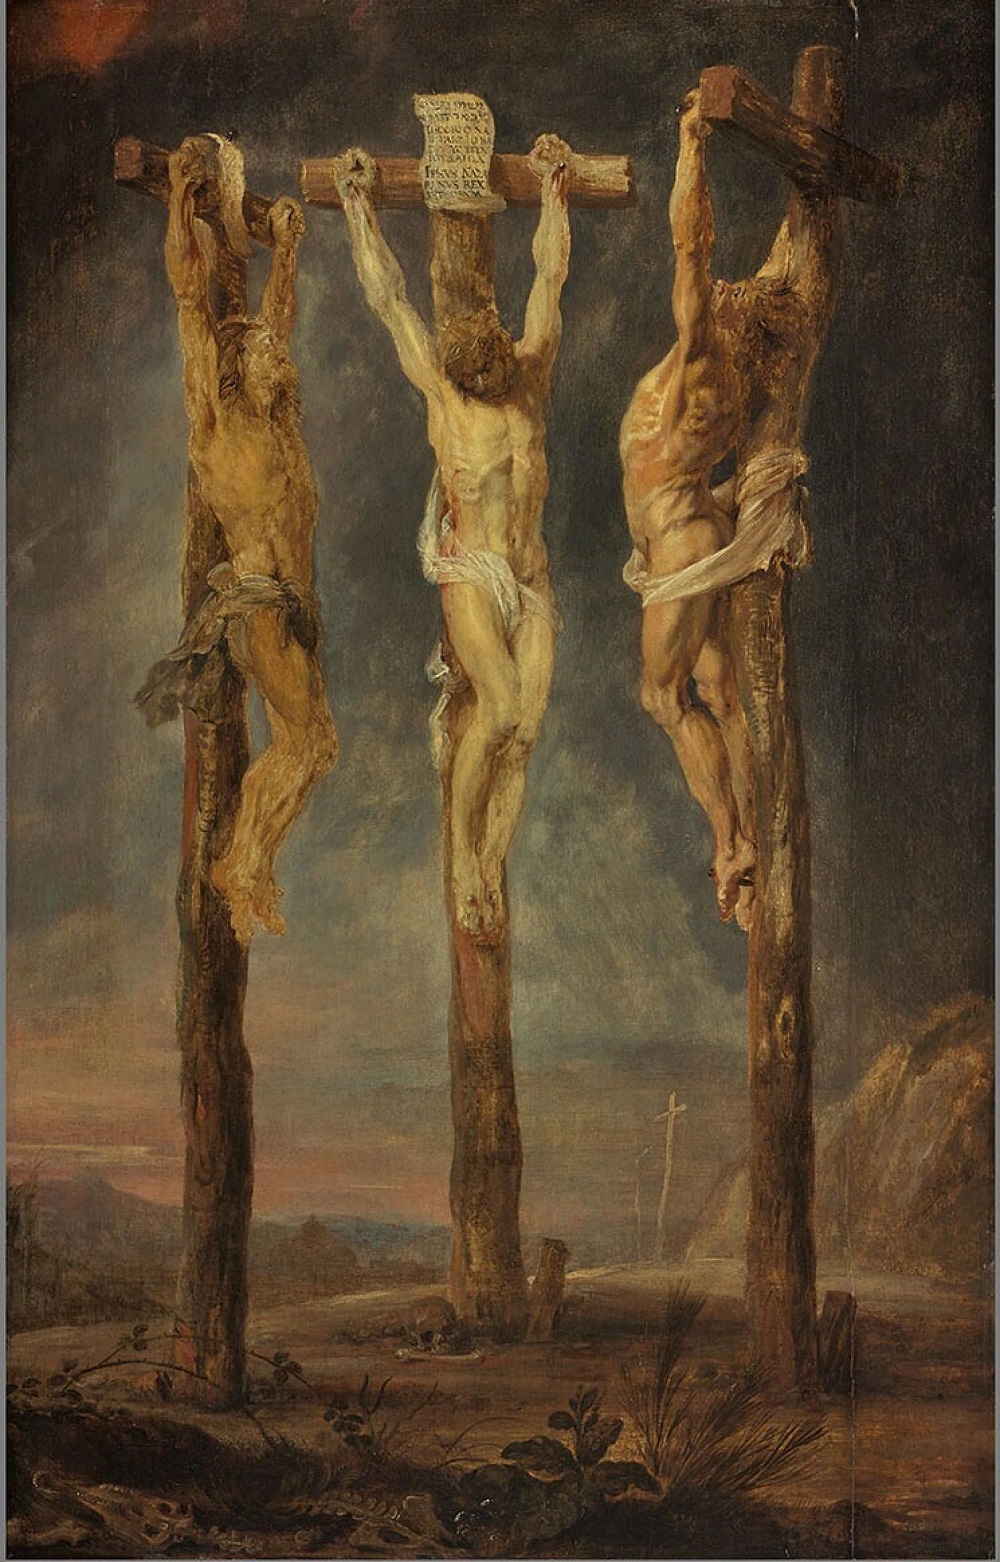 1620 ca Peter_Paul_Rubens_The_Three_Crosses Boymans van Beuningen Rotterdam